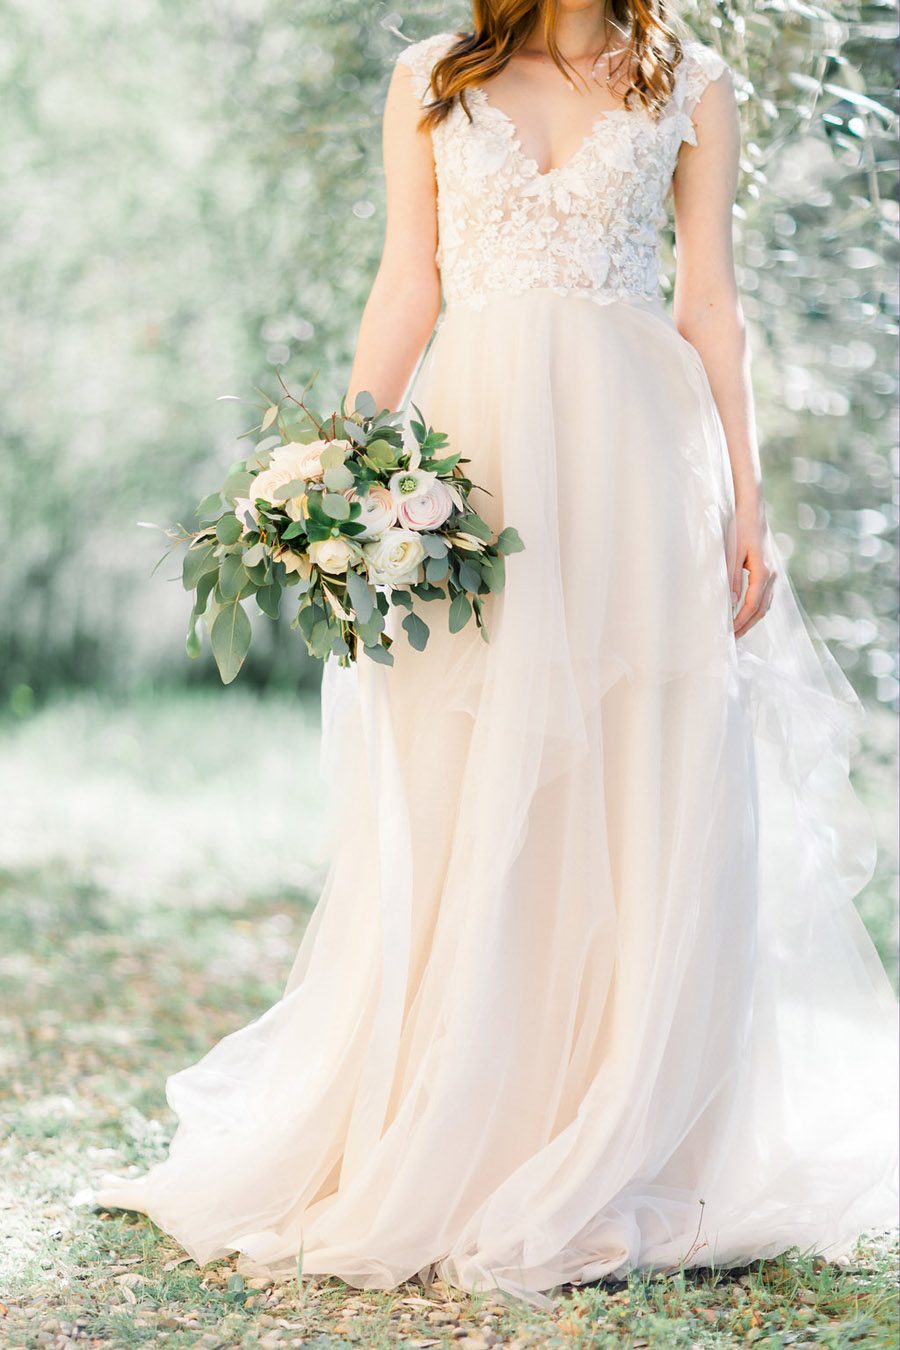 Tuscany Italian wedding ideas styling tips with Sonya Lalla Photography on English-Wedding.com (39)